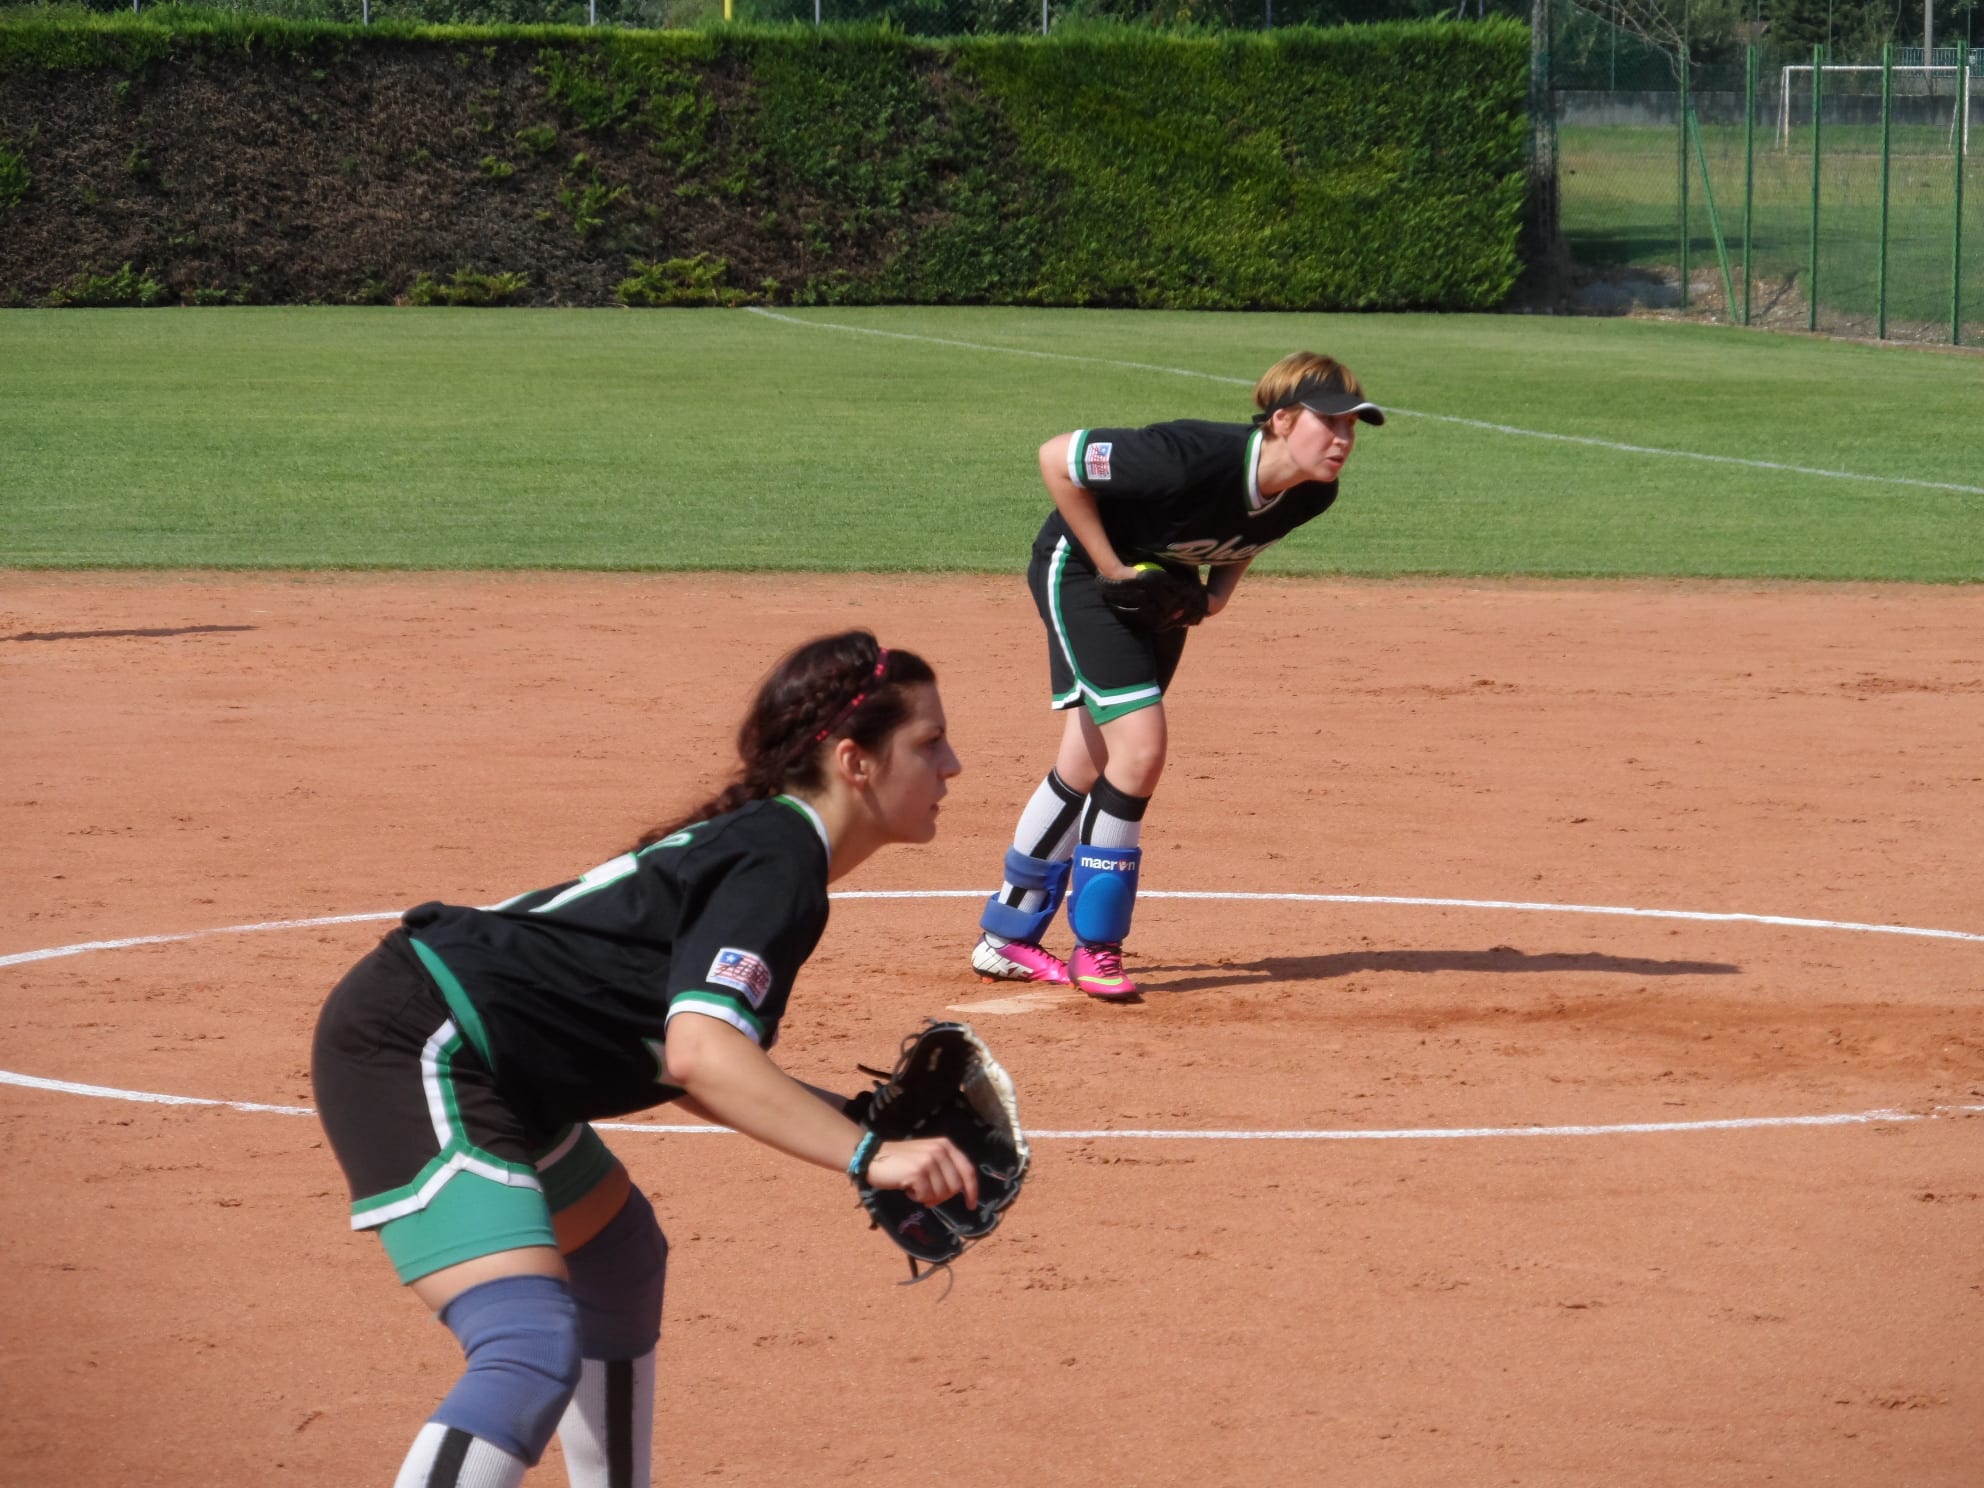 Softball: finale Caronno-Rovigo, si giocherà a Bariola